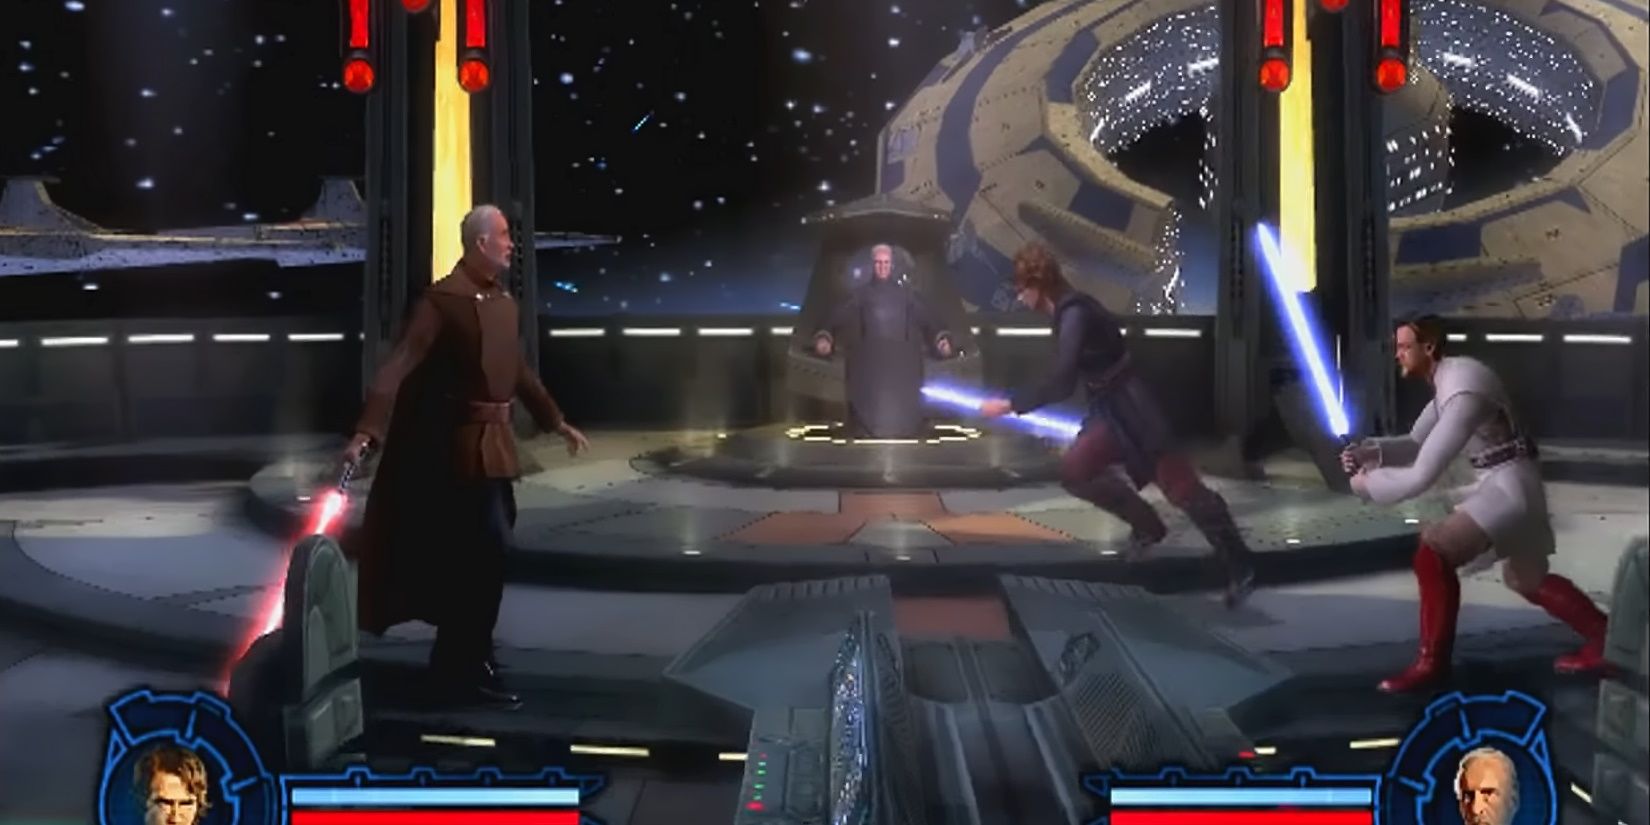 A lightsaber battle between Count Dooku, Anakin Skywalker, and Obi-Wan Kenobi in the Revenge of the Sith tie-in game.